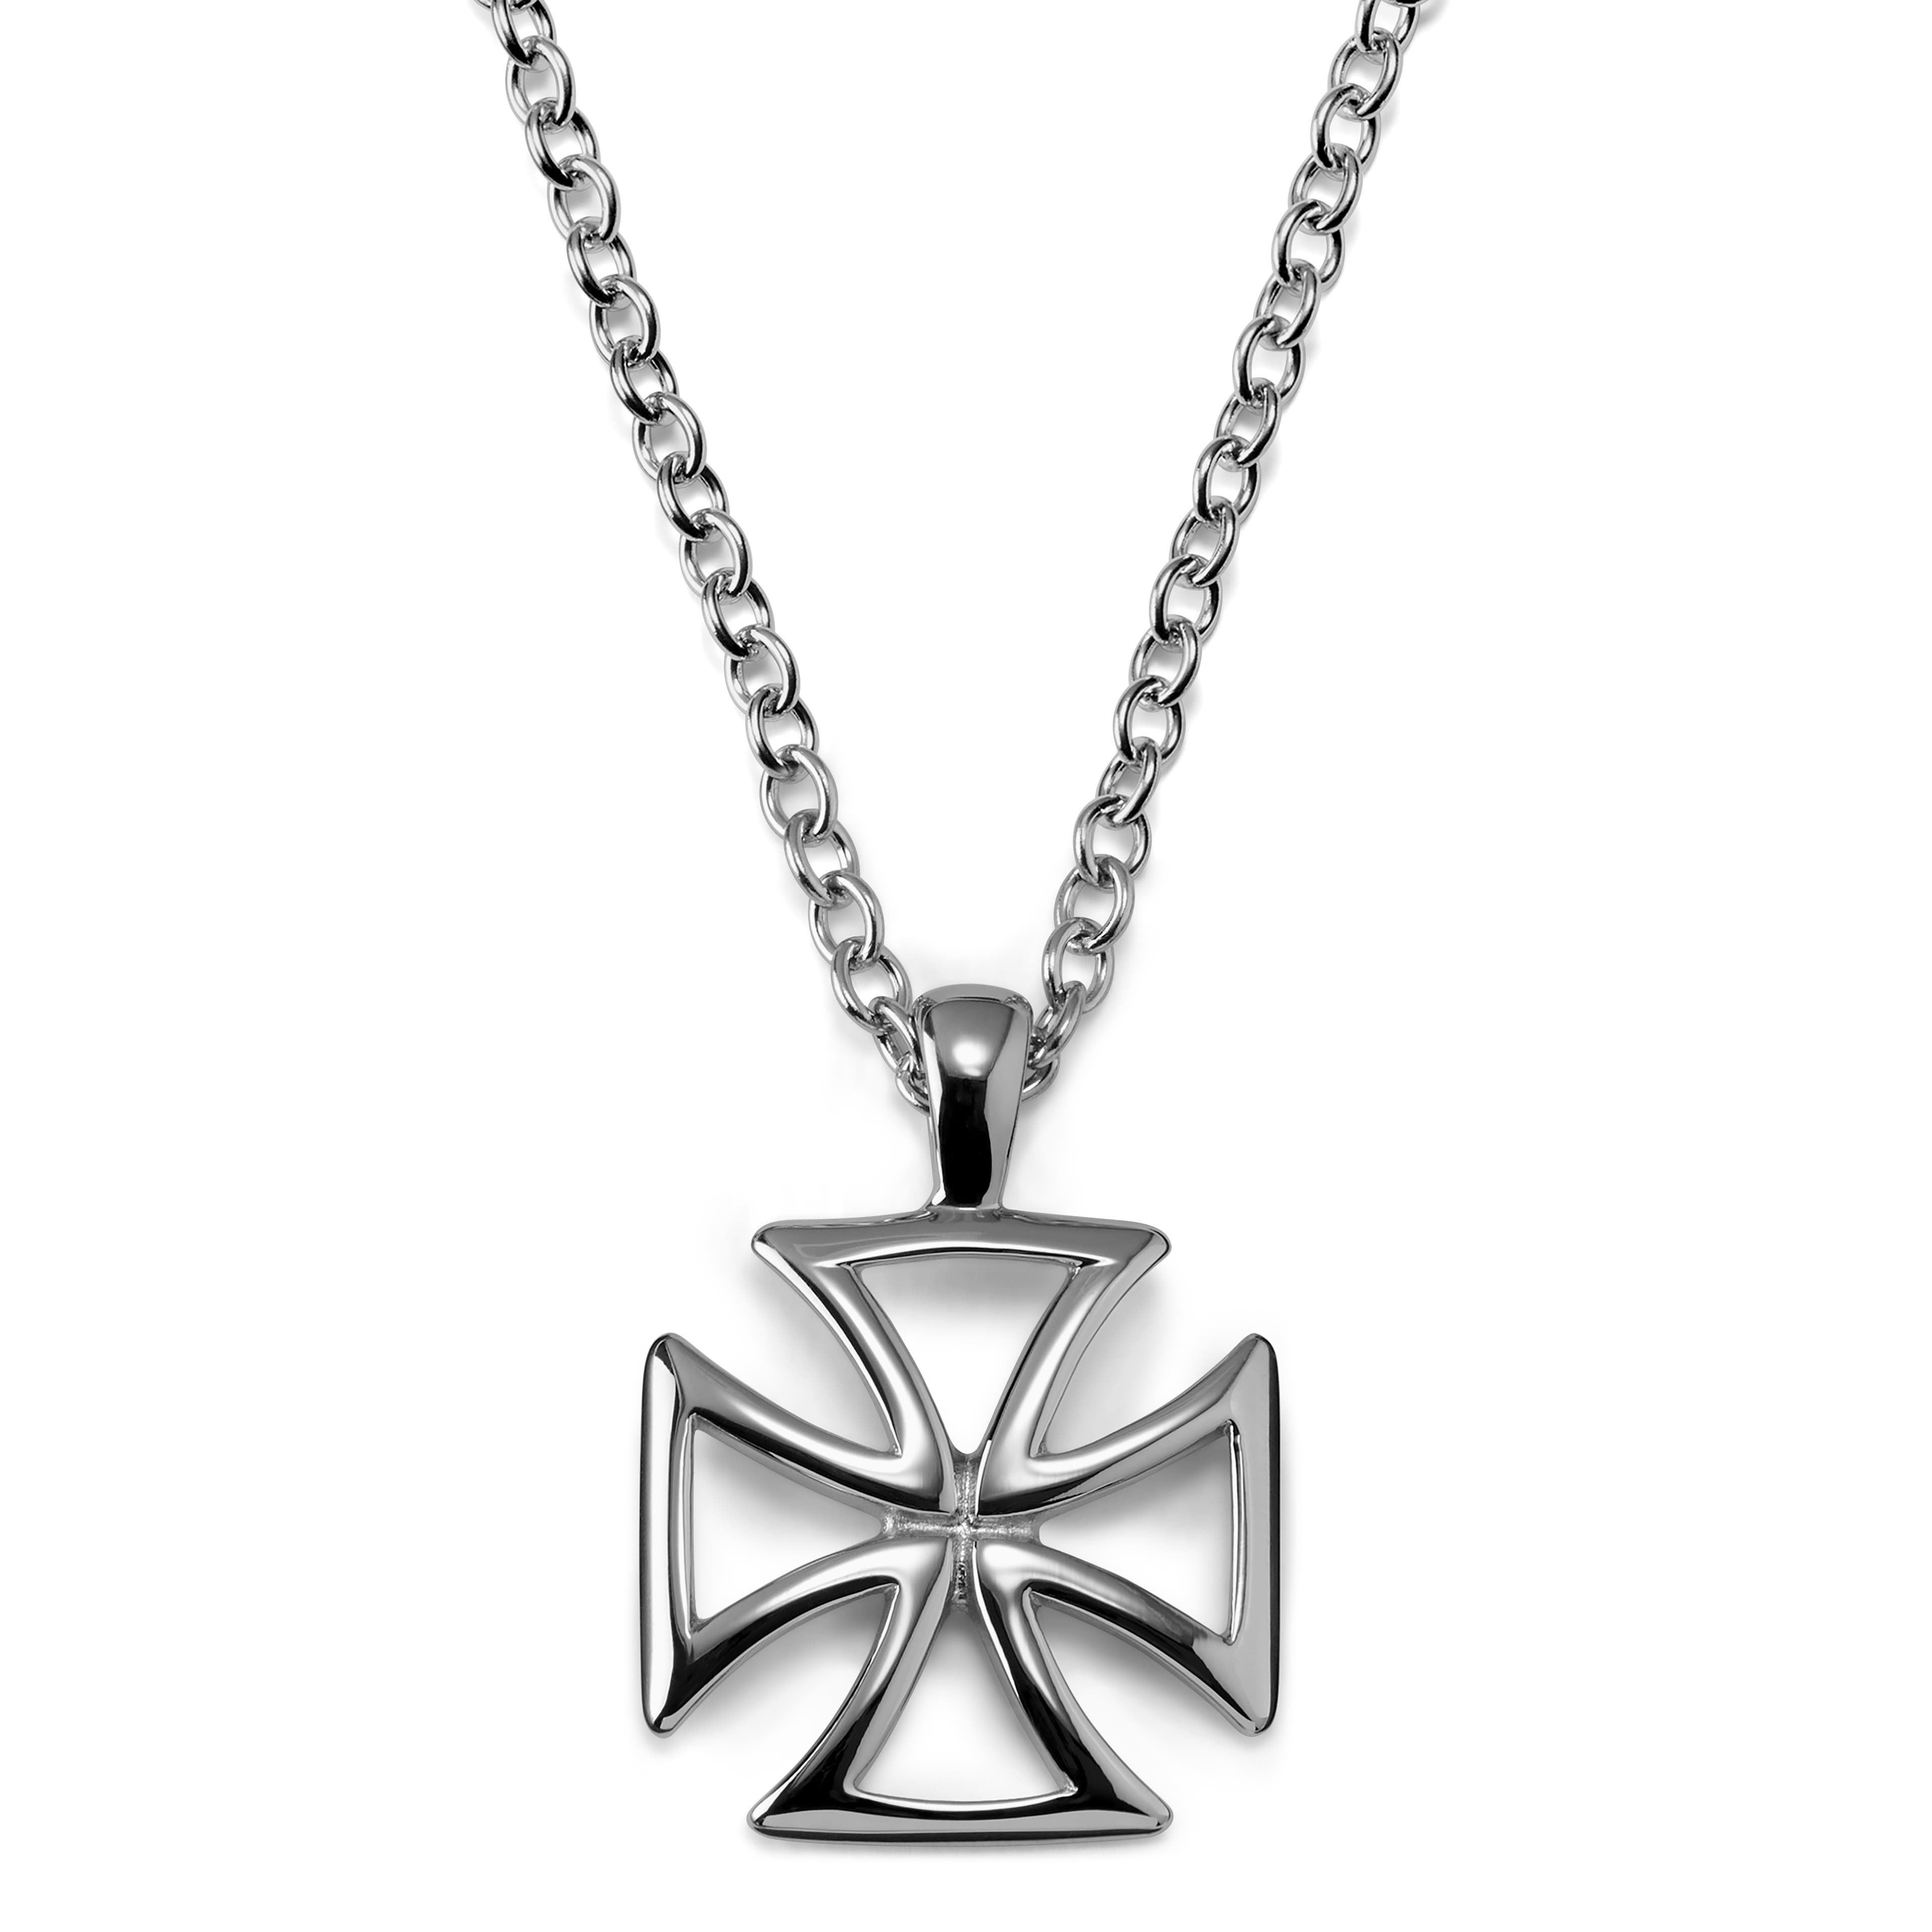 Maltský krížový oceľový náhrdelník